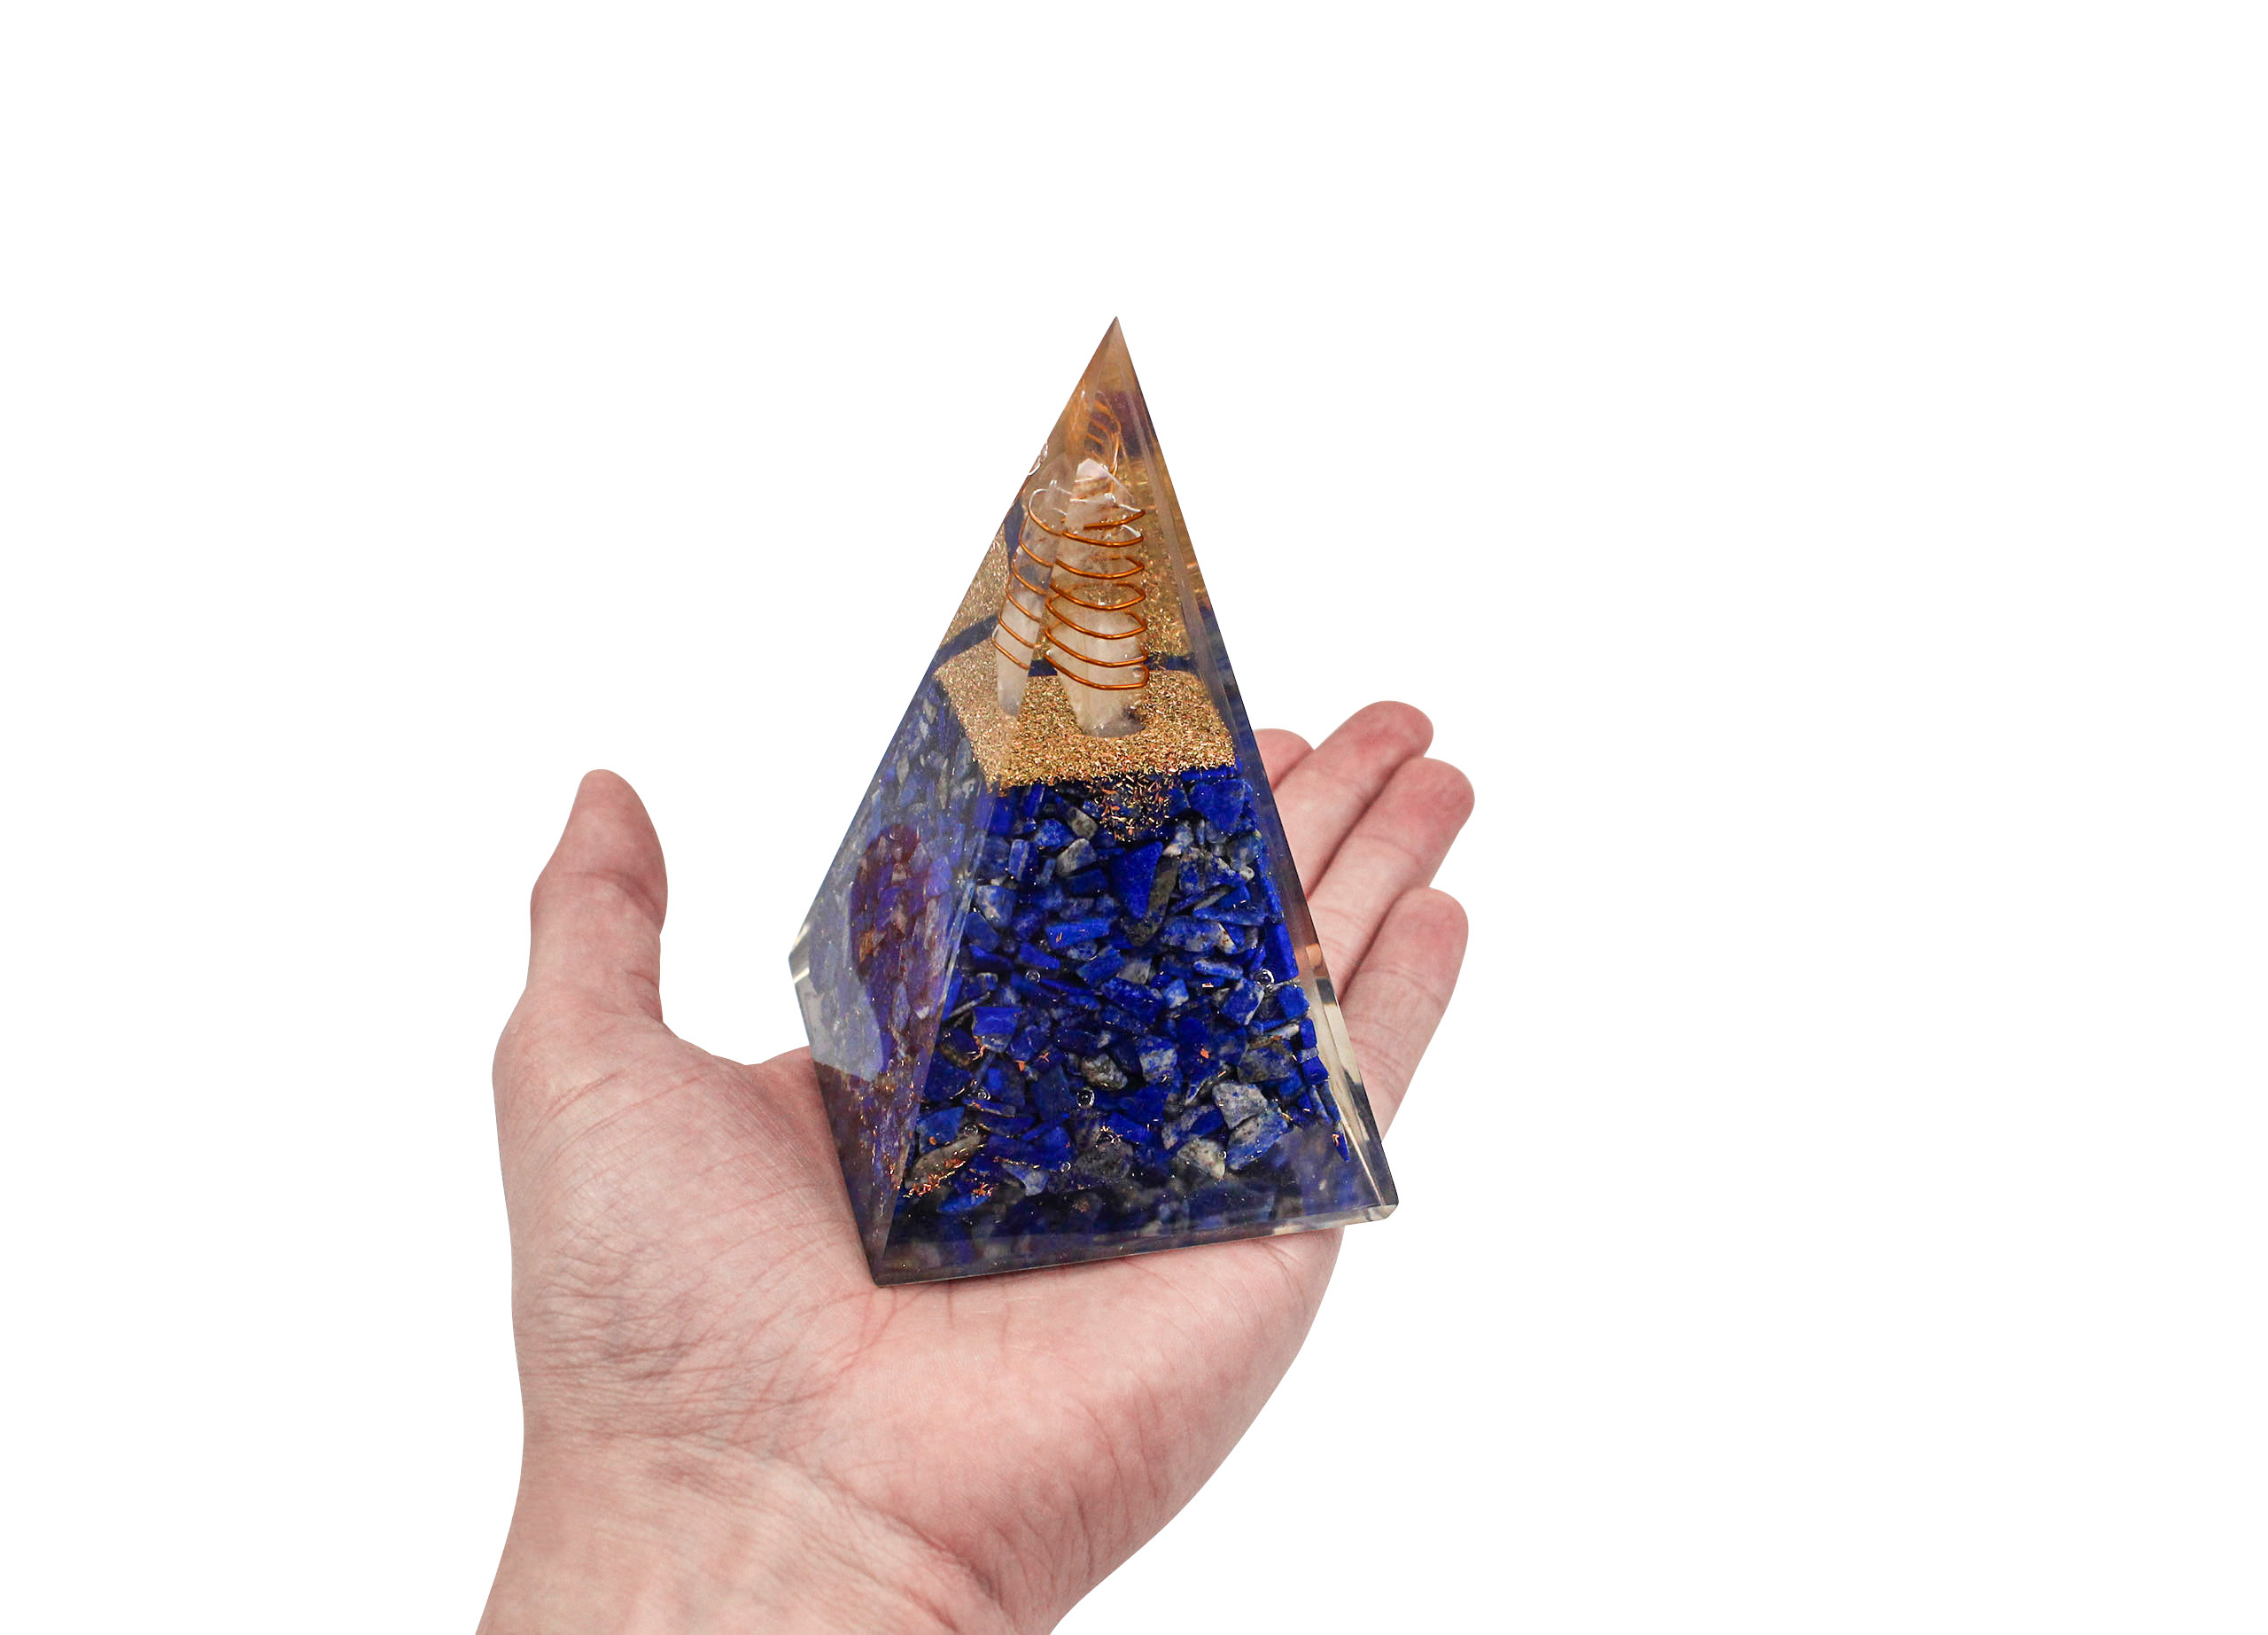 Nubian Orgone Pyramid – Lapis Lazuli (Tall) - Crystal Dreams